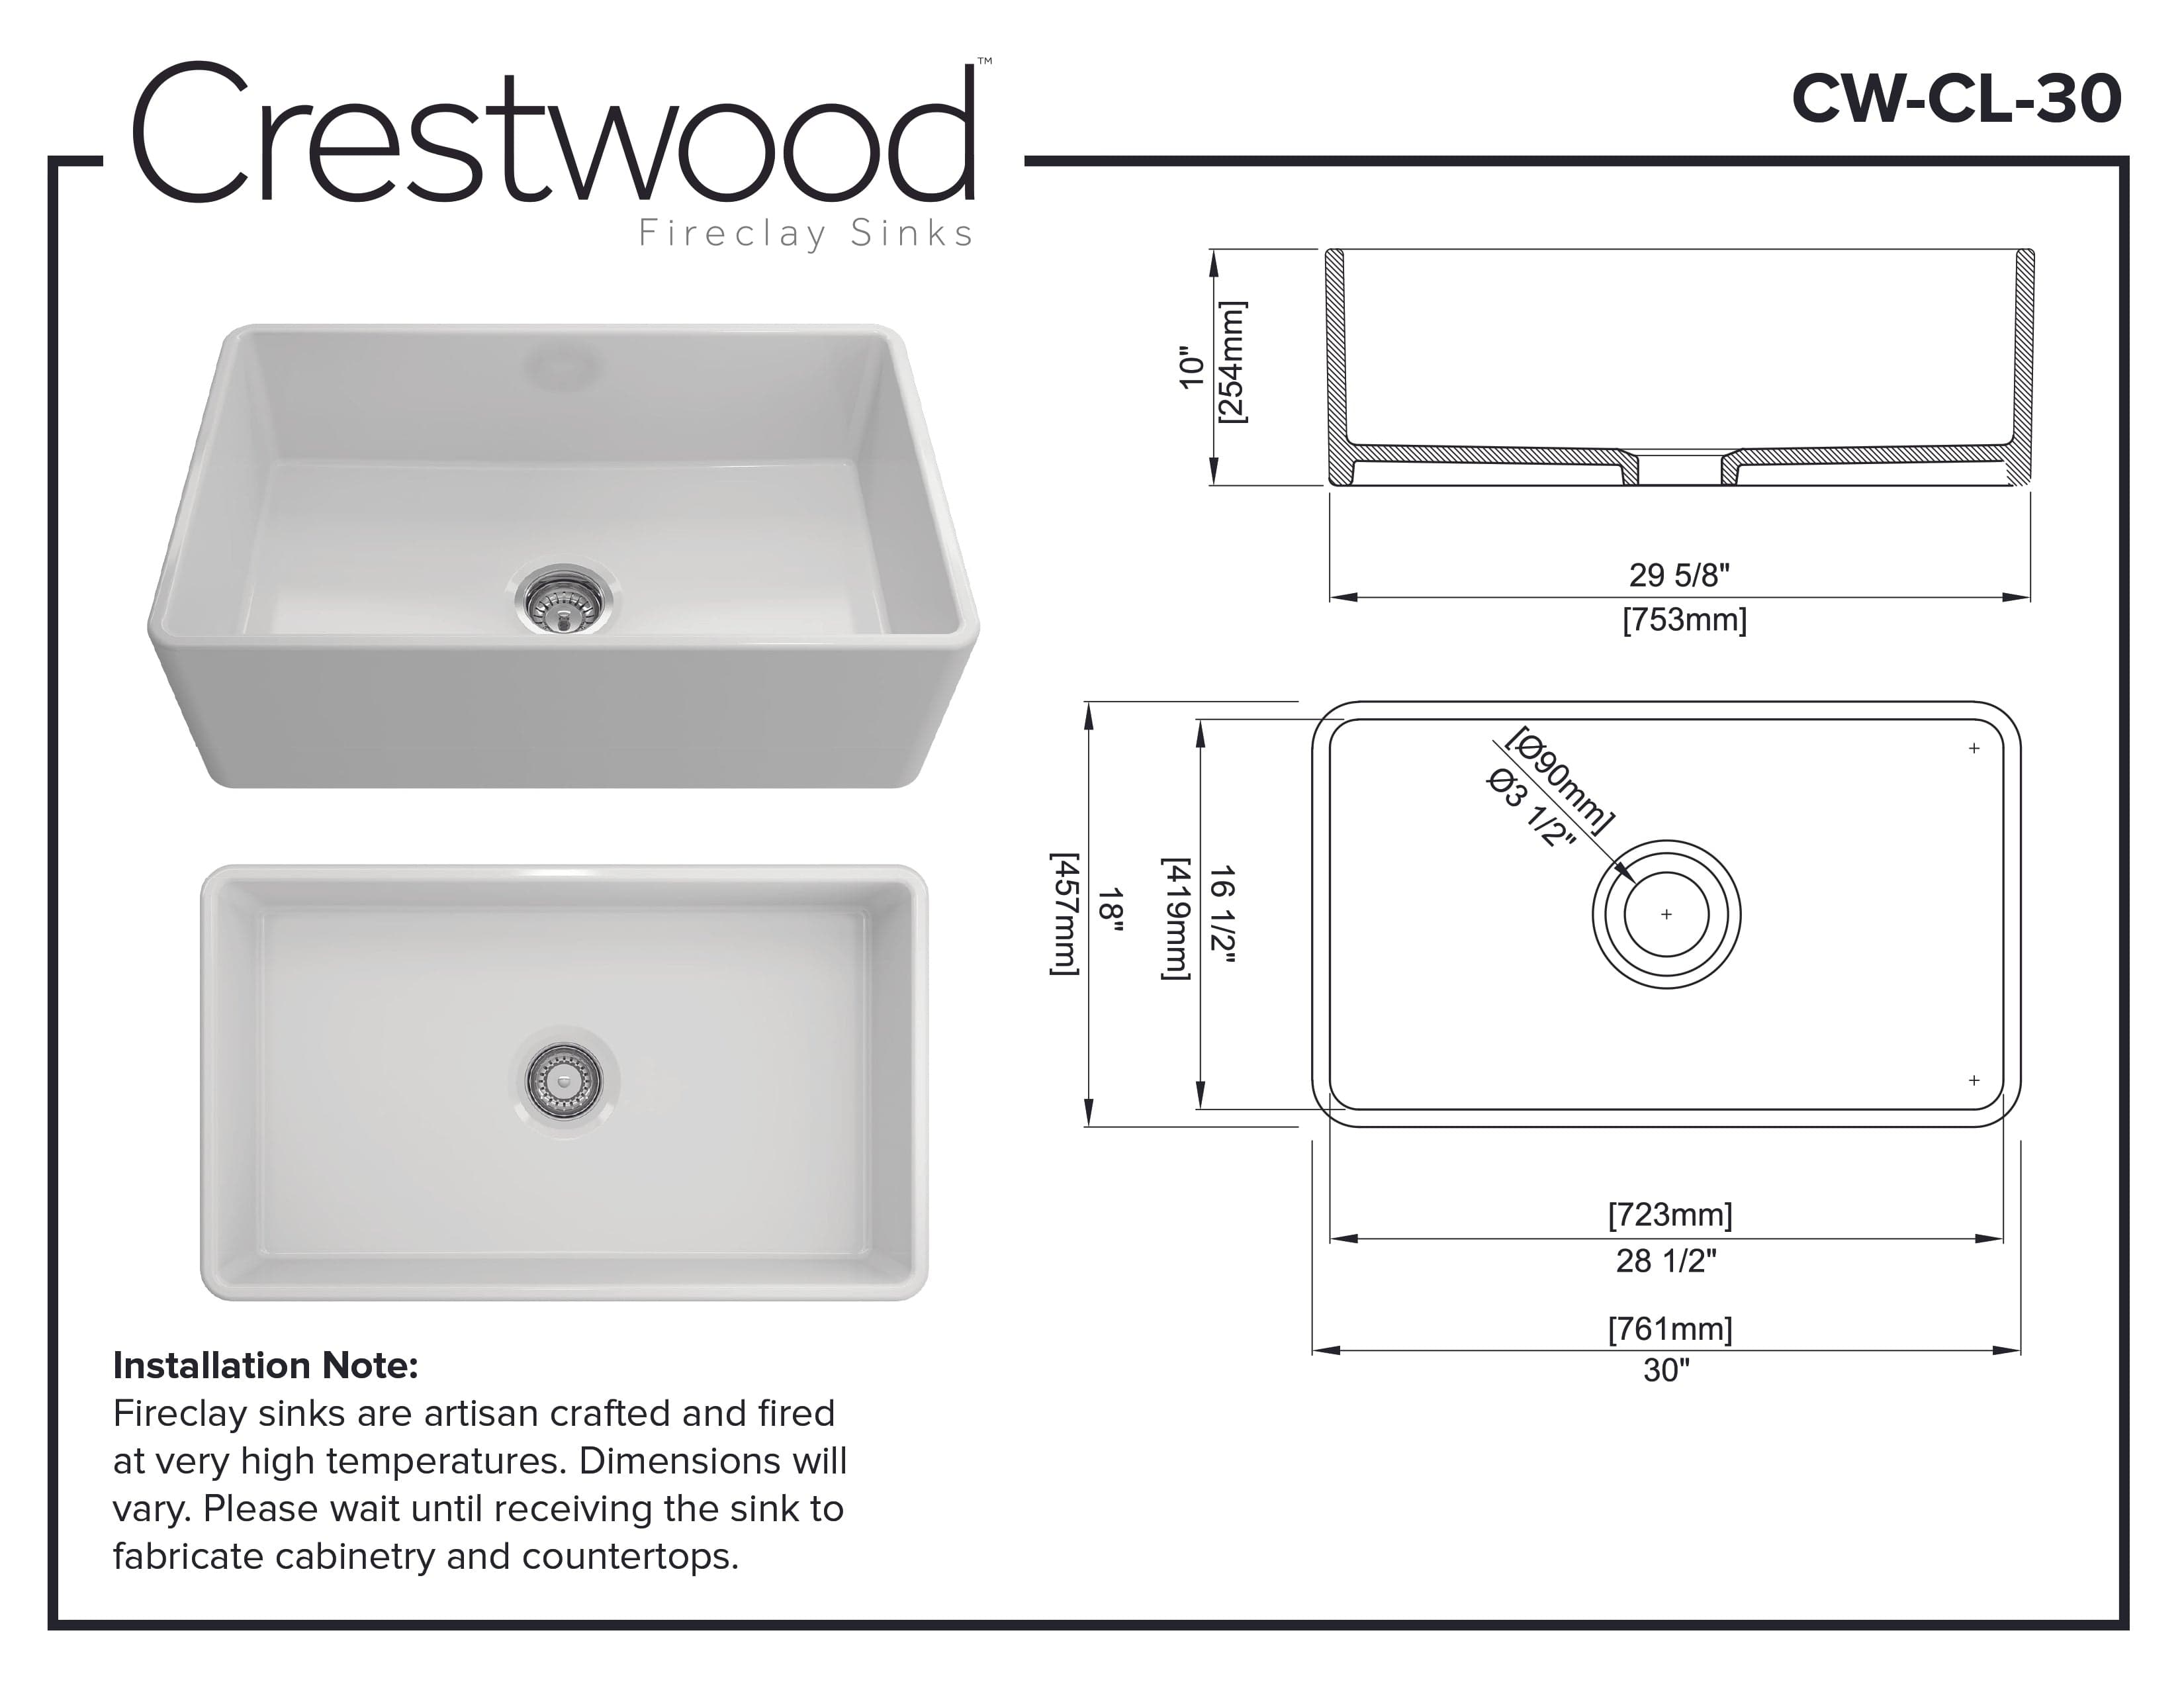 Crestwood 30" Classic Single Bowl Fireclay Sink